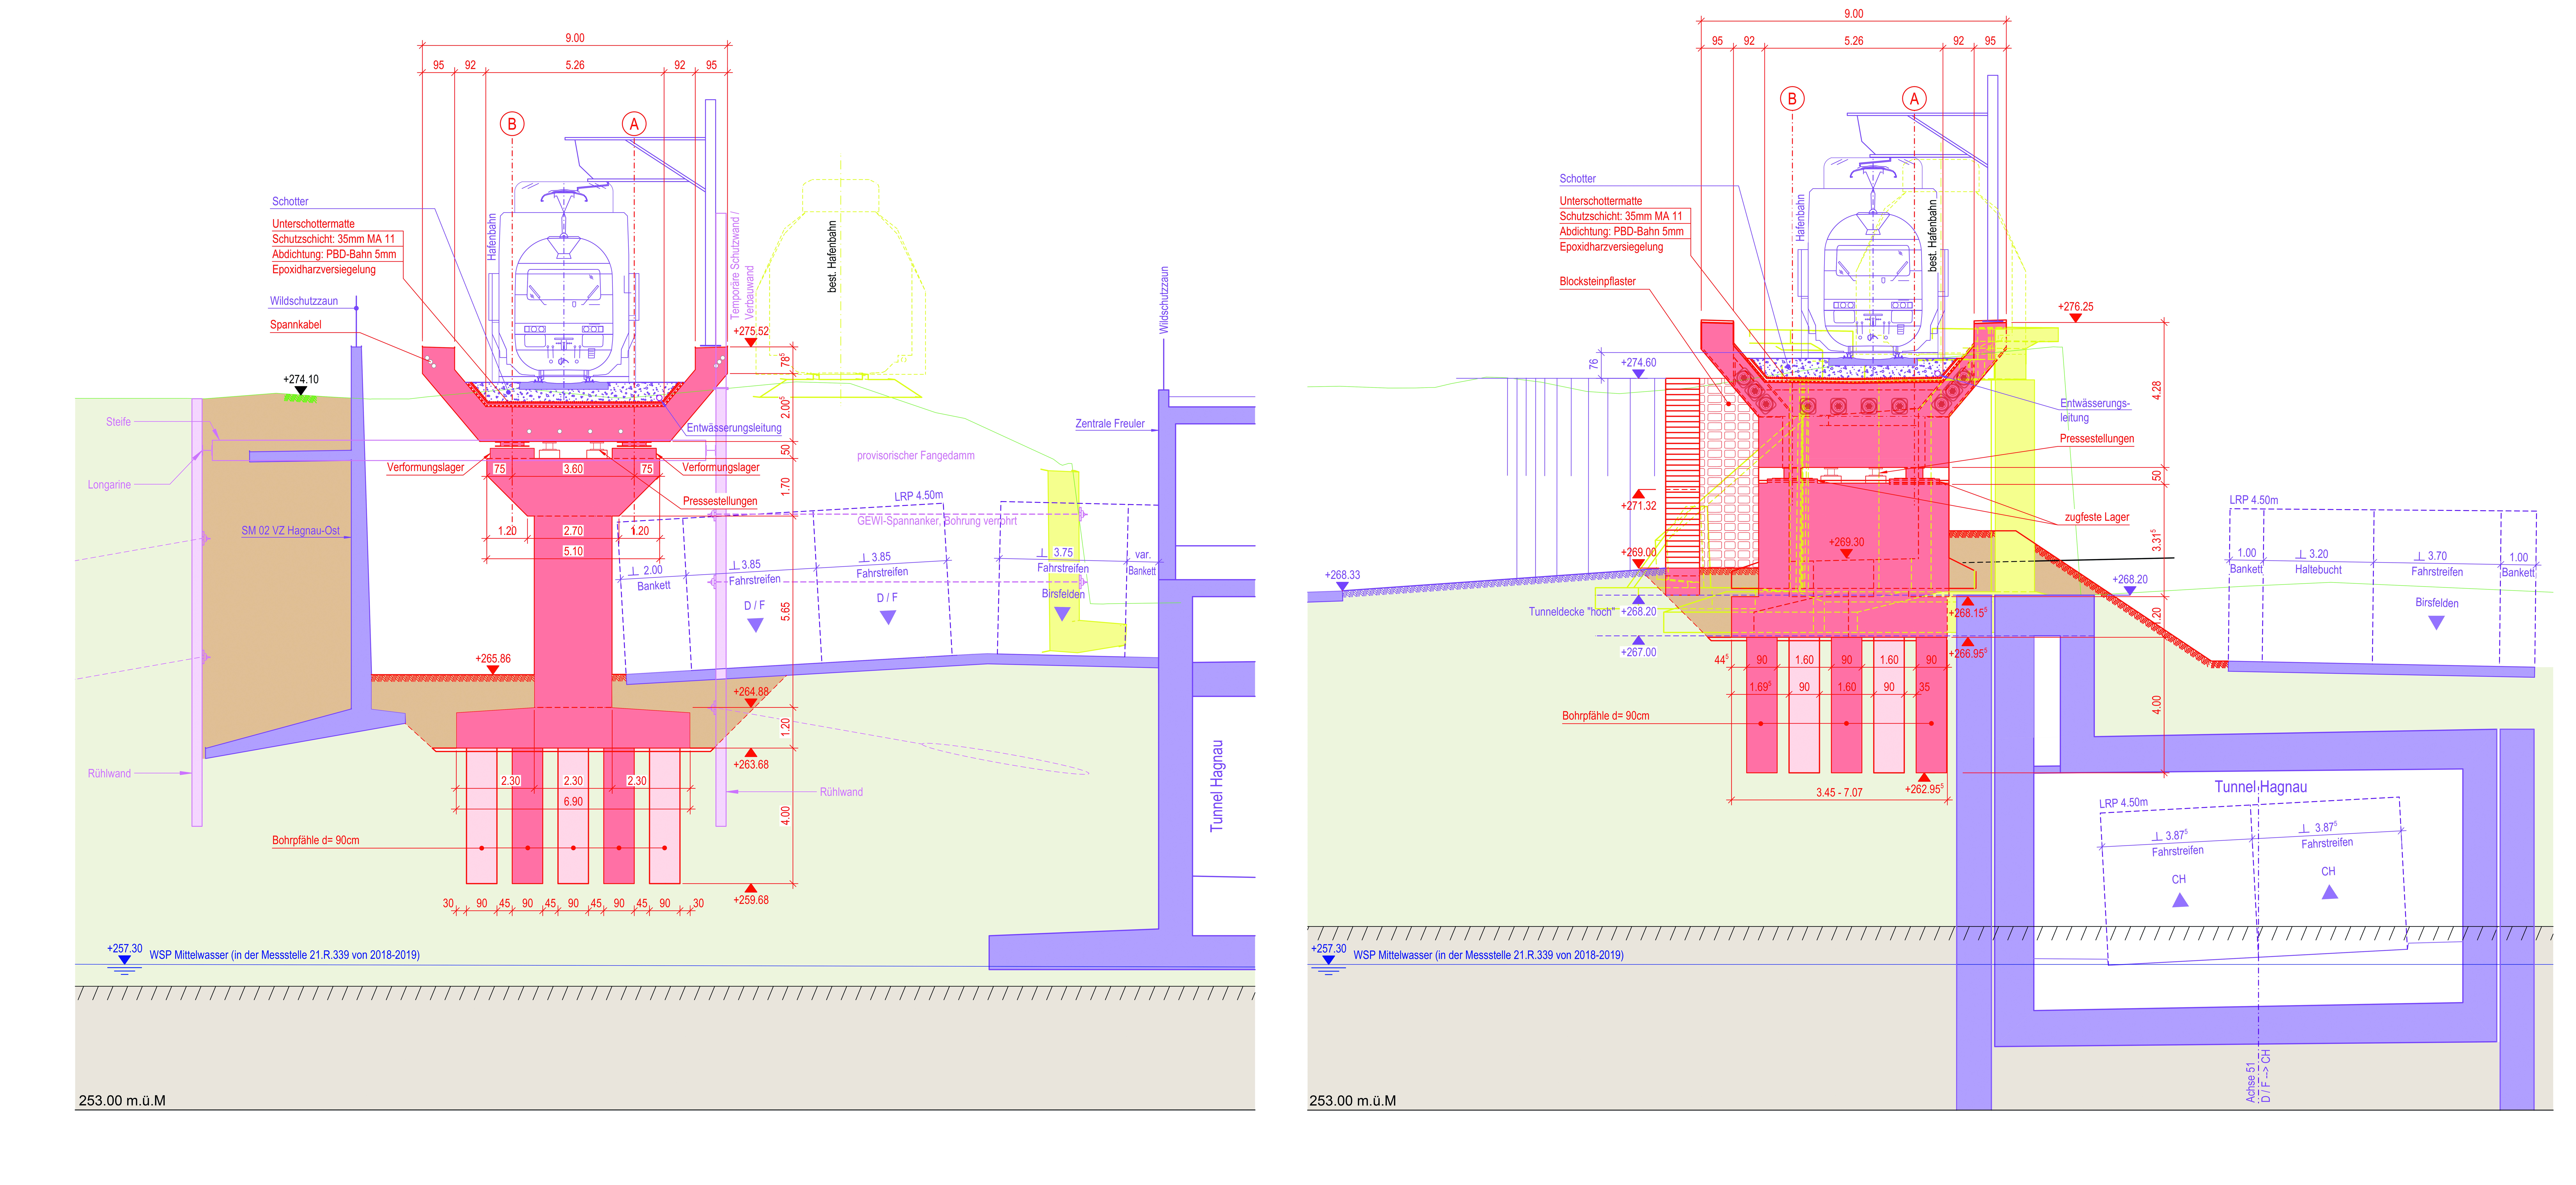 Grafik: Querschnitt 2 (Achse 30) und Querschnitt 3 (Achse 10) mit BIM-Software Allplan erstellt.